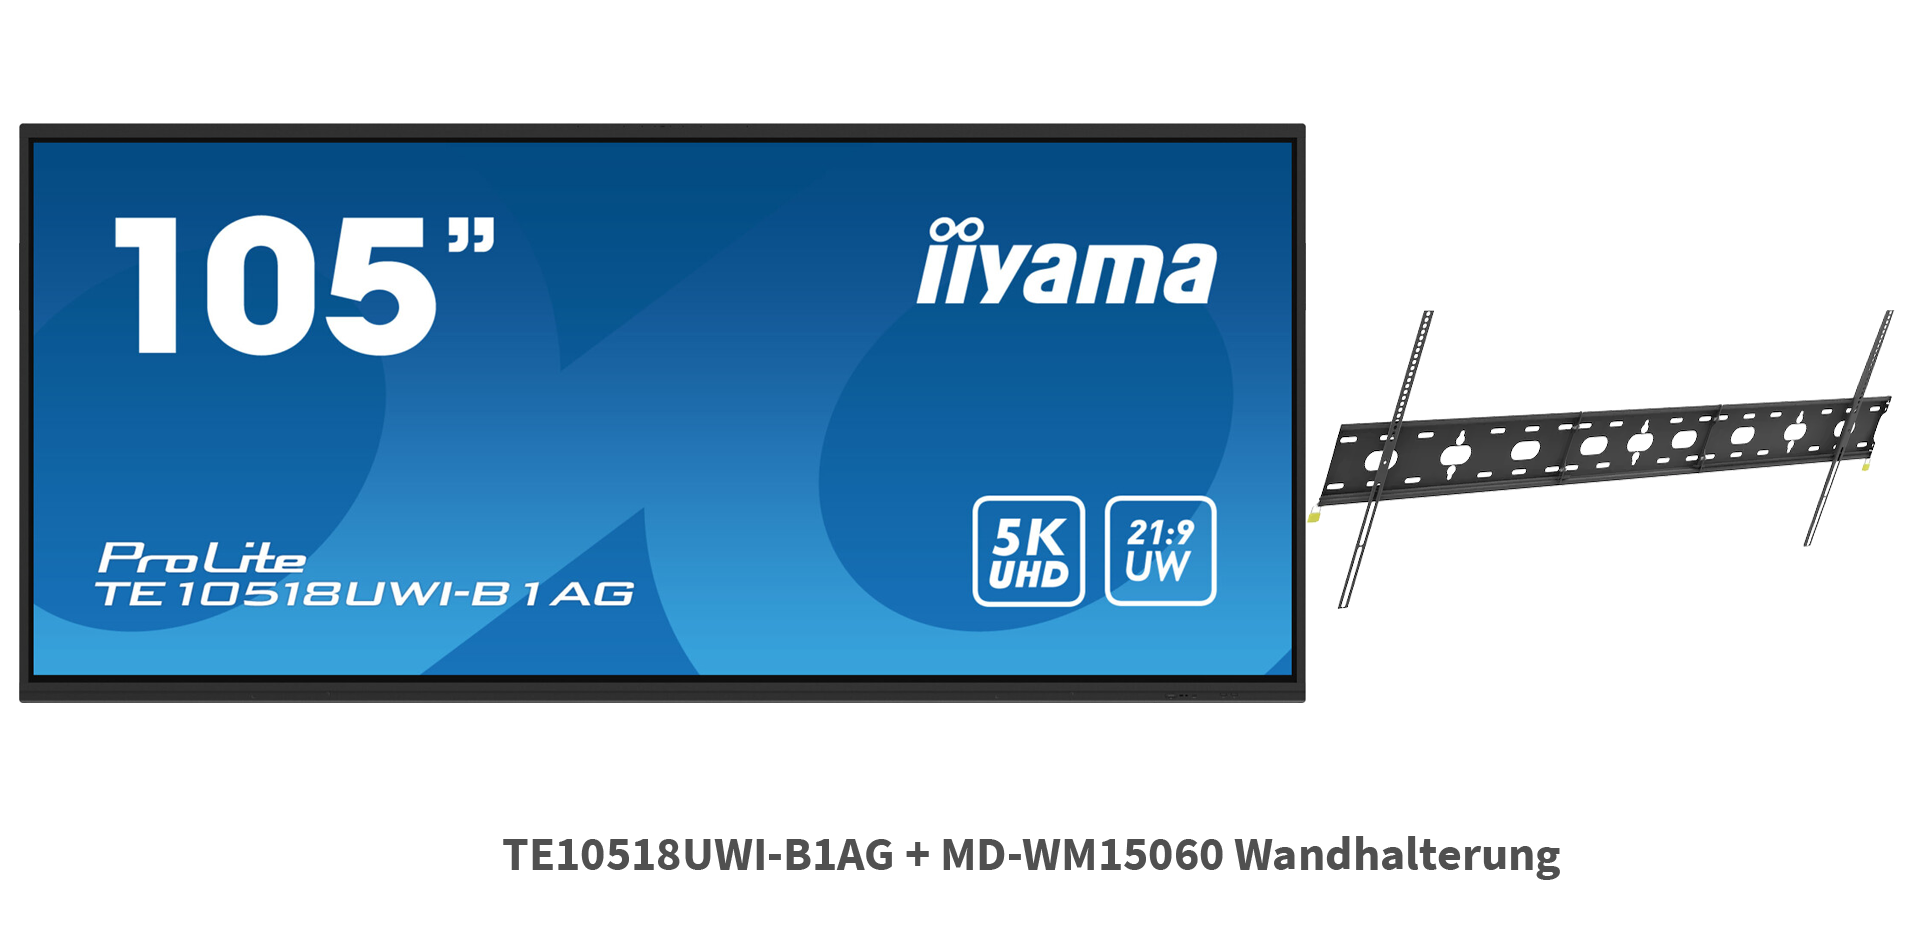 iiyama ProLite TE10518UWI-B1AG - 105 Zoll - 450 cd/m² - Ultrawide - 5120x2160 - Android -  Touch Display + WM15060 Wandhalterung - Bundle